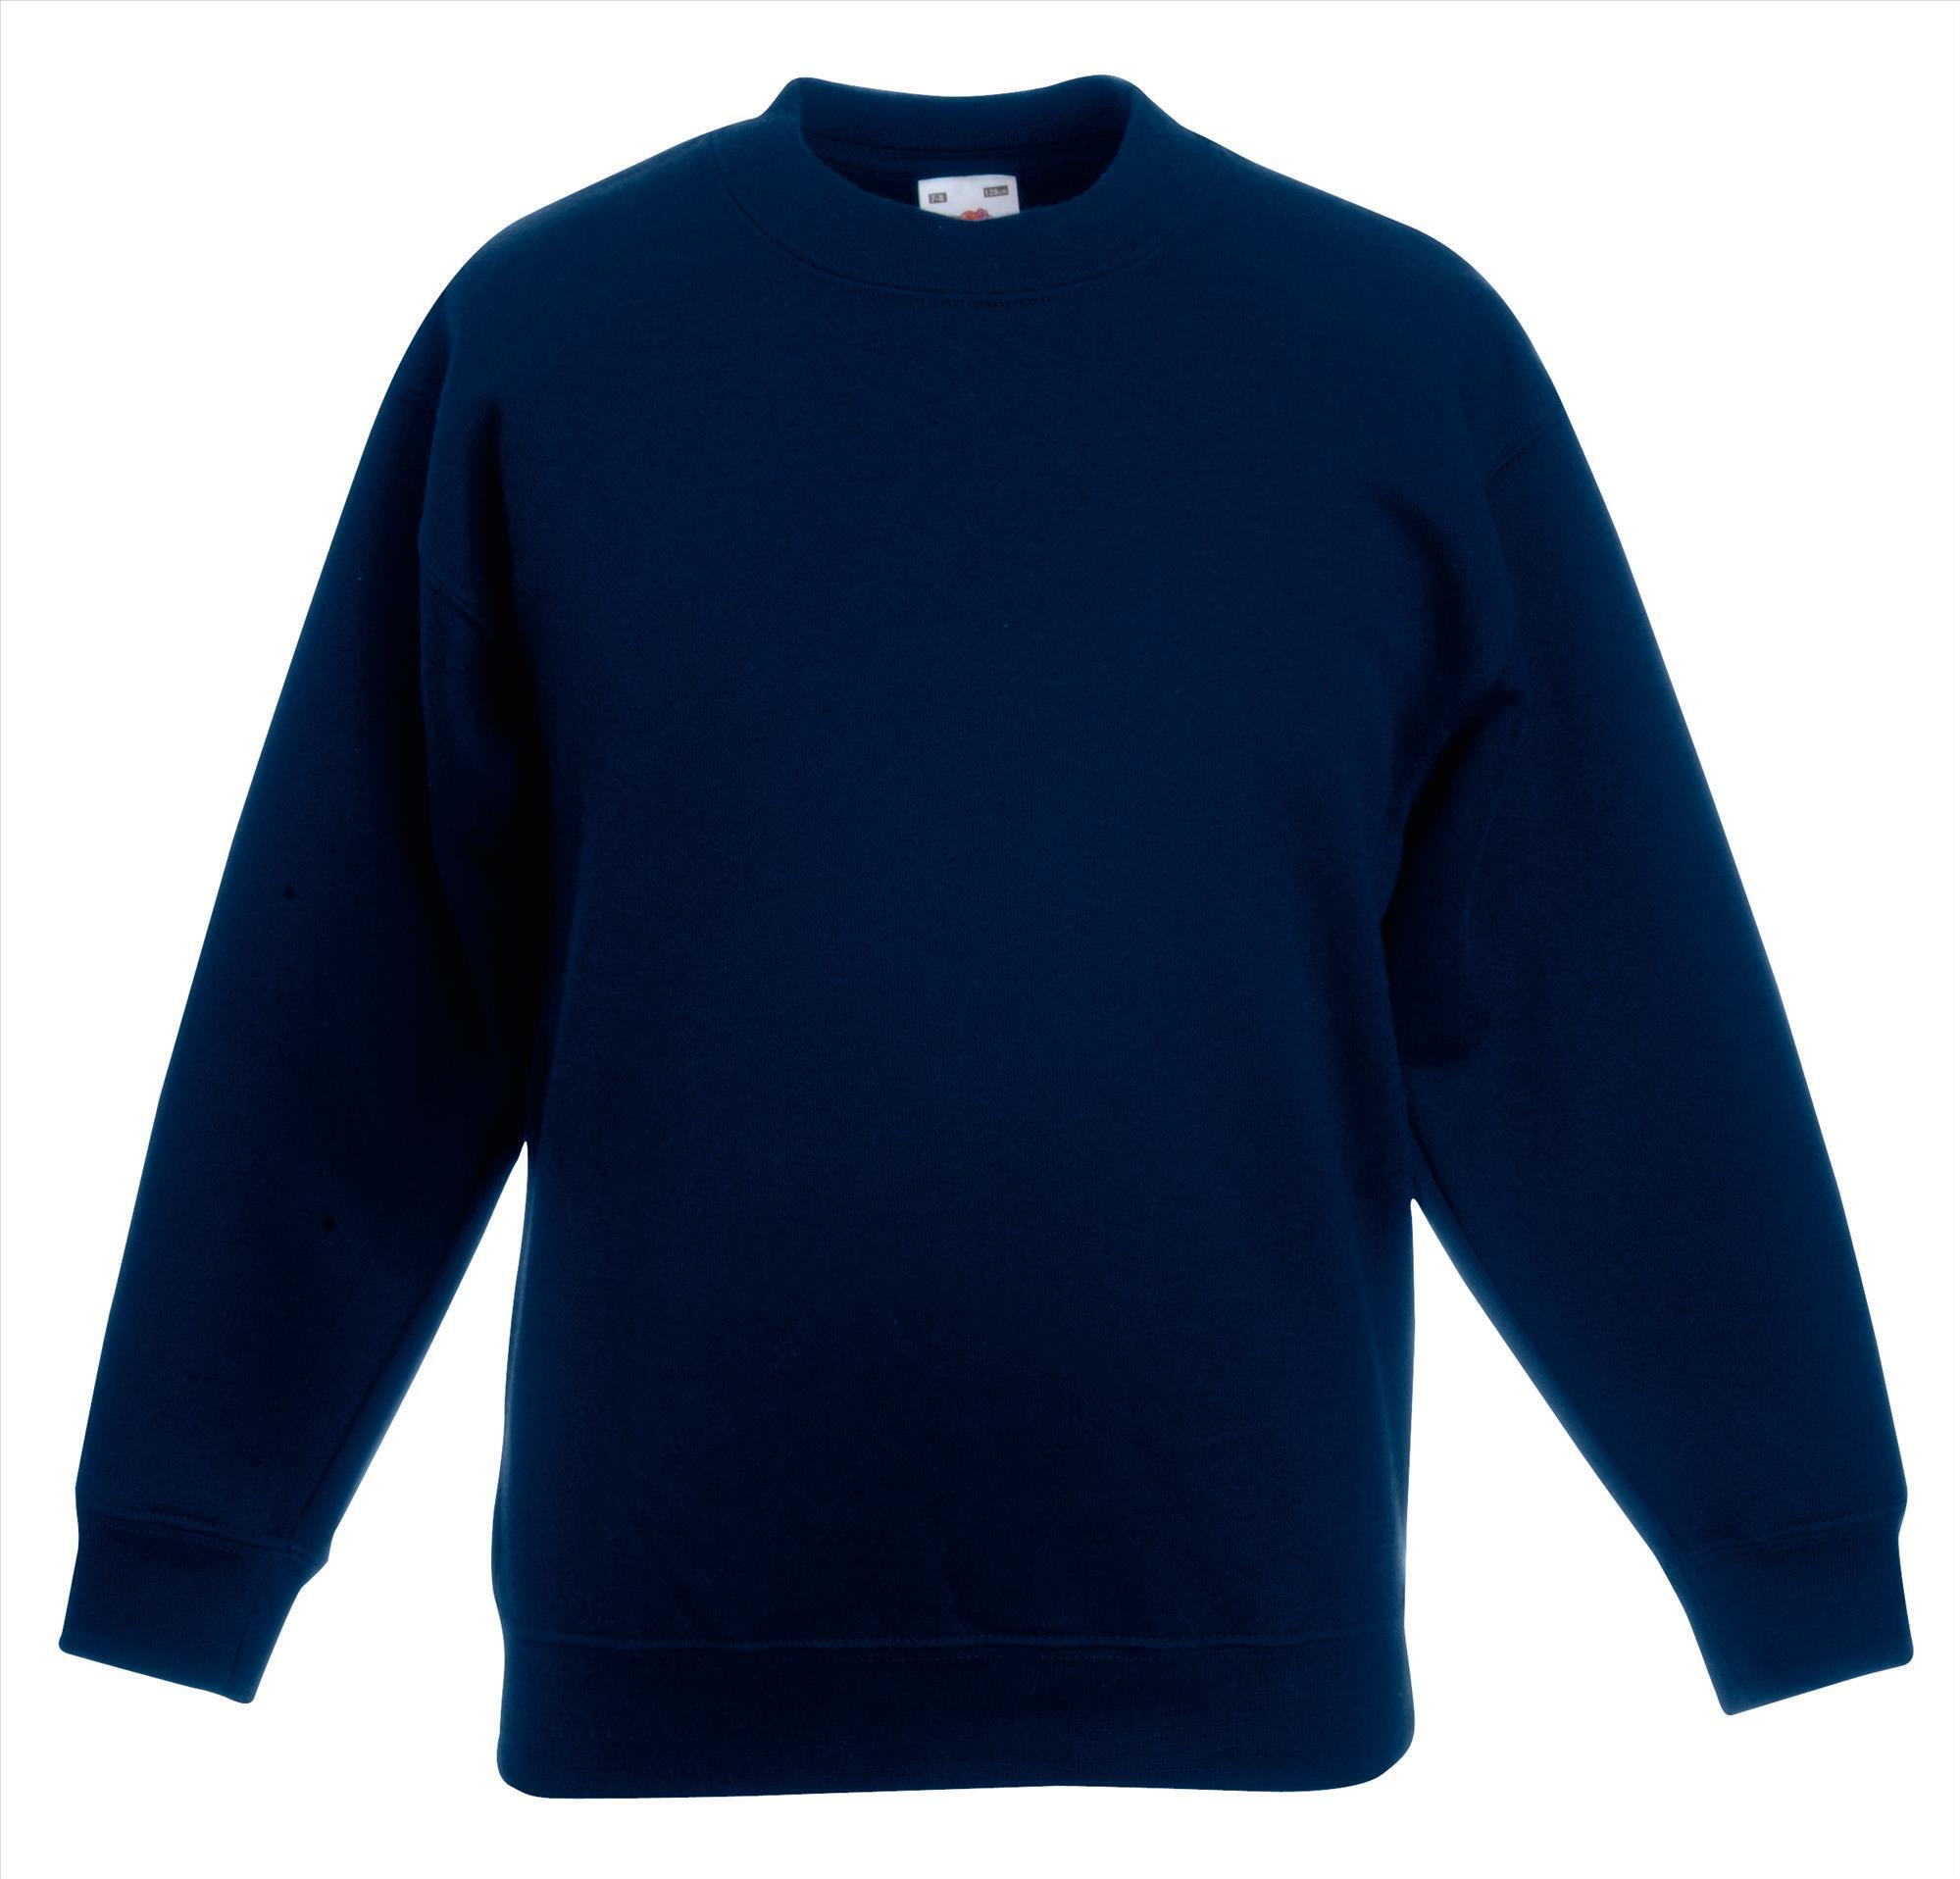 Donker blauwe kinder trui Kinder sweater Premium